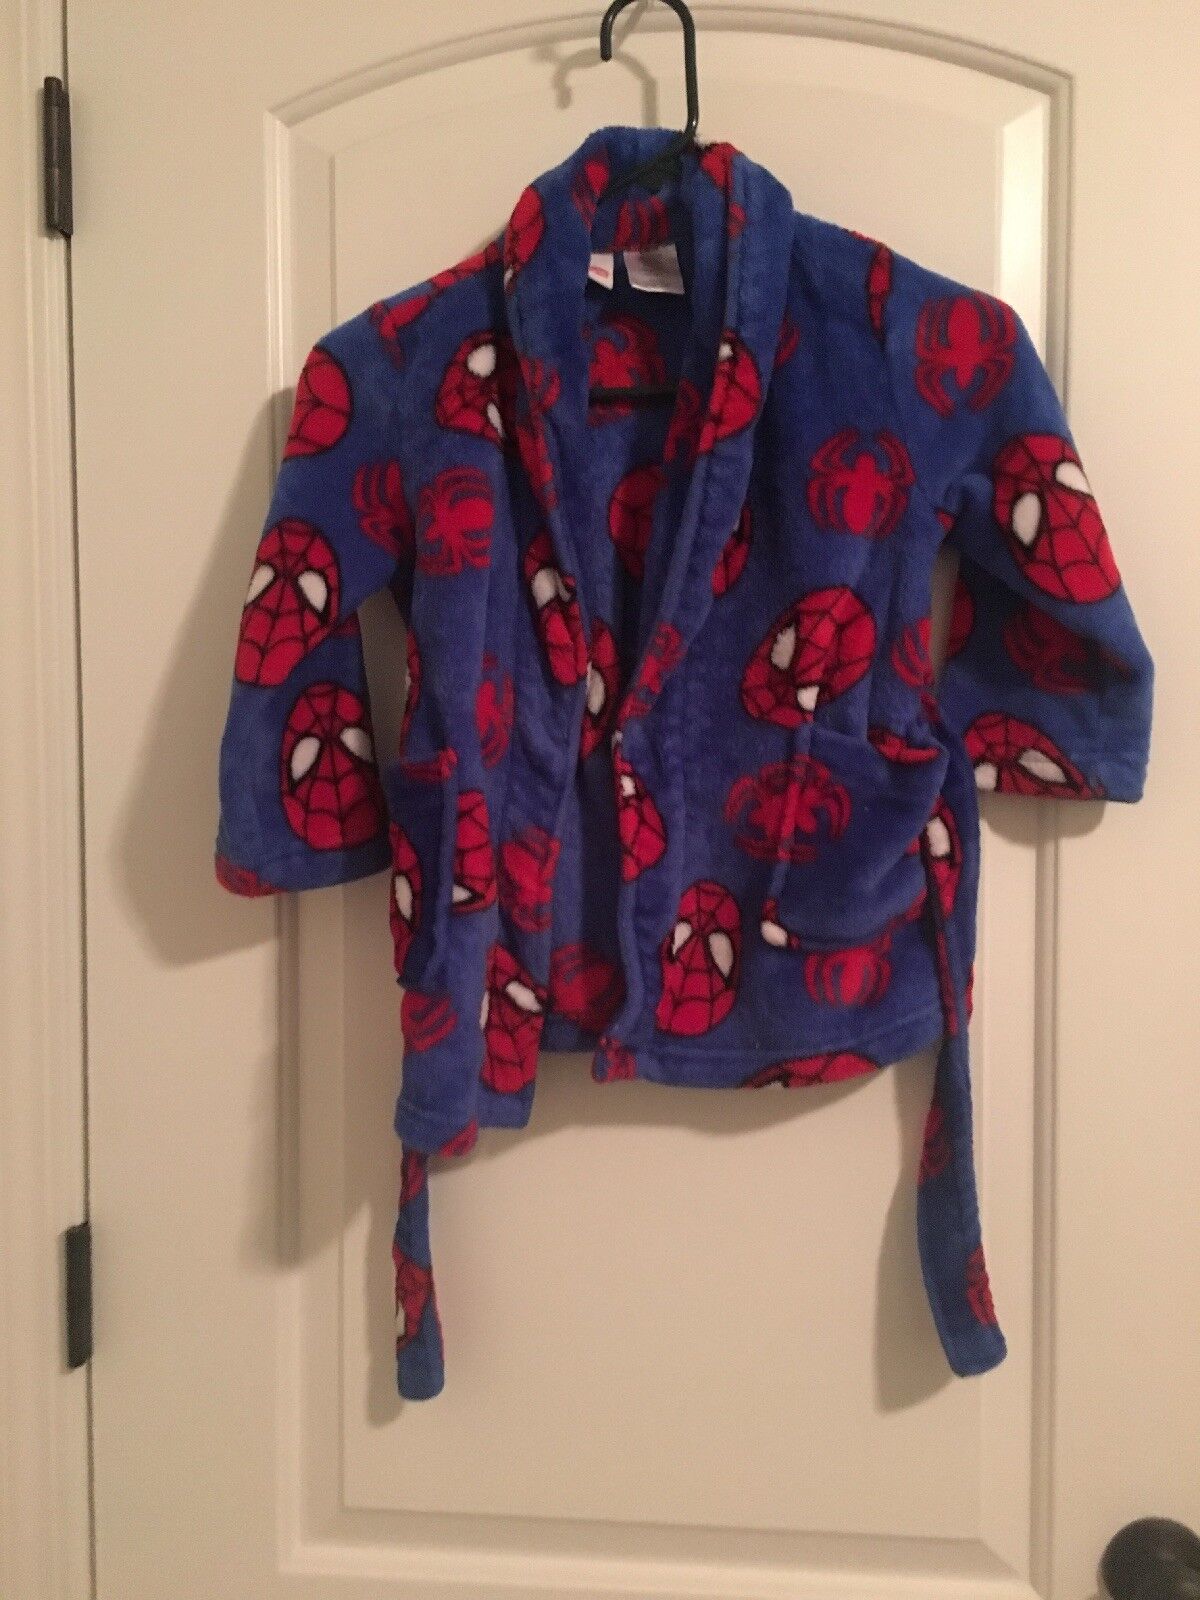 Marvel Spider-Man Bath Robe Blue & Red Boys Size 4/5 - $34.99